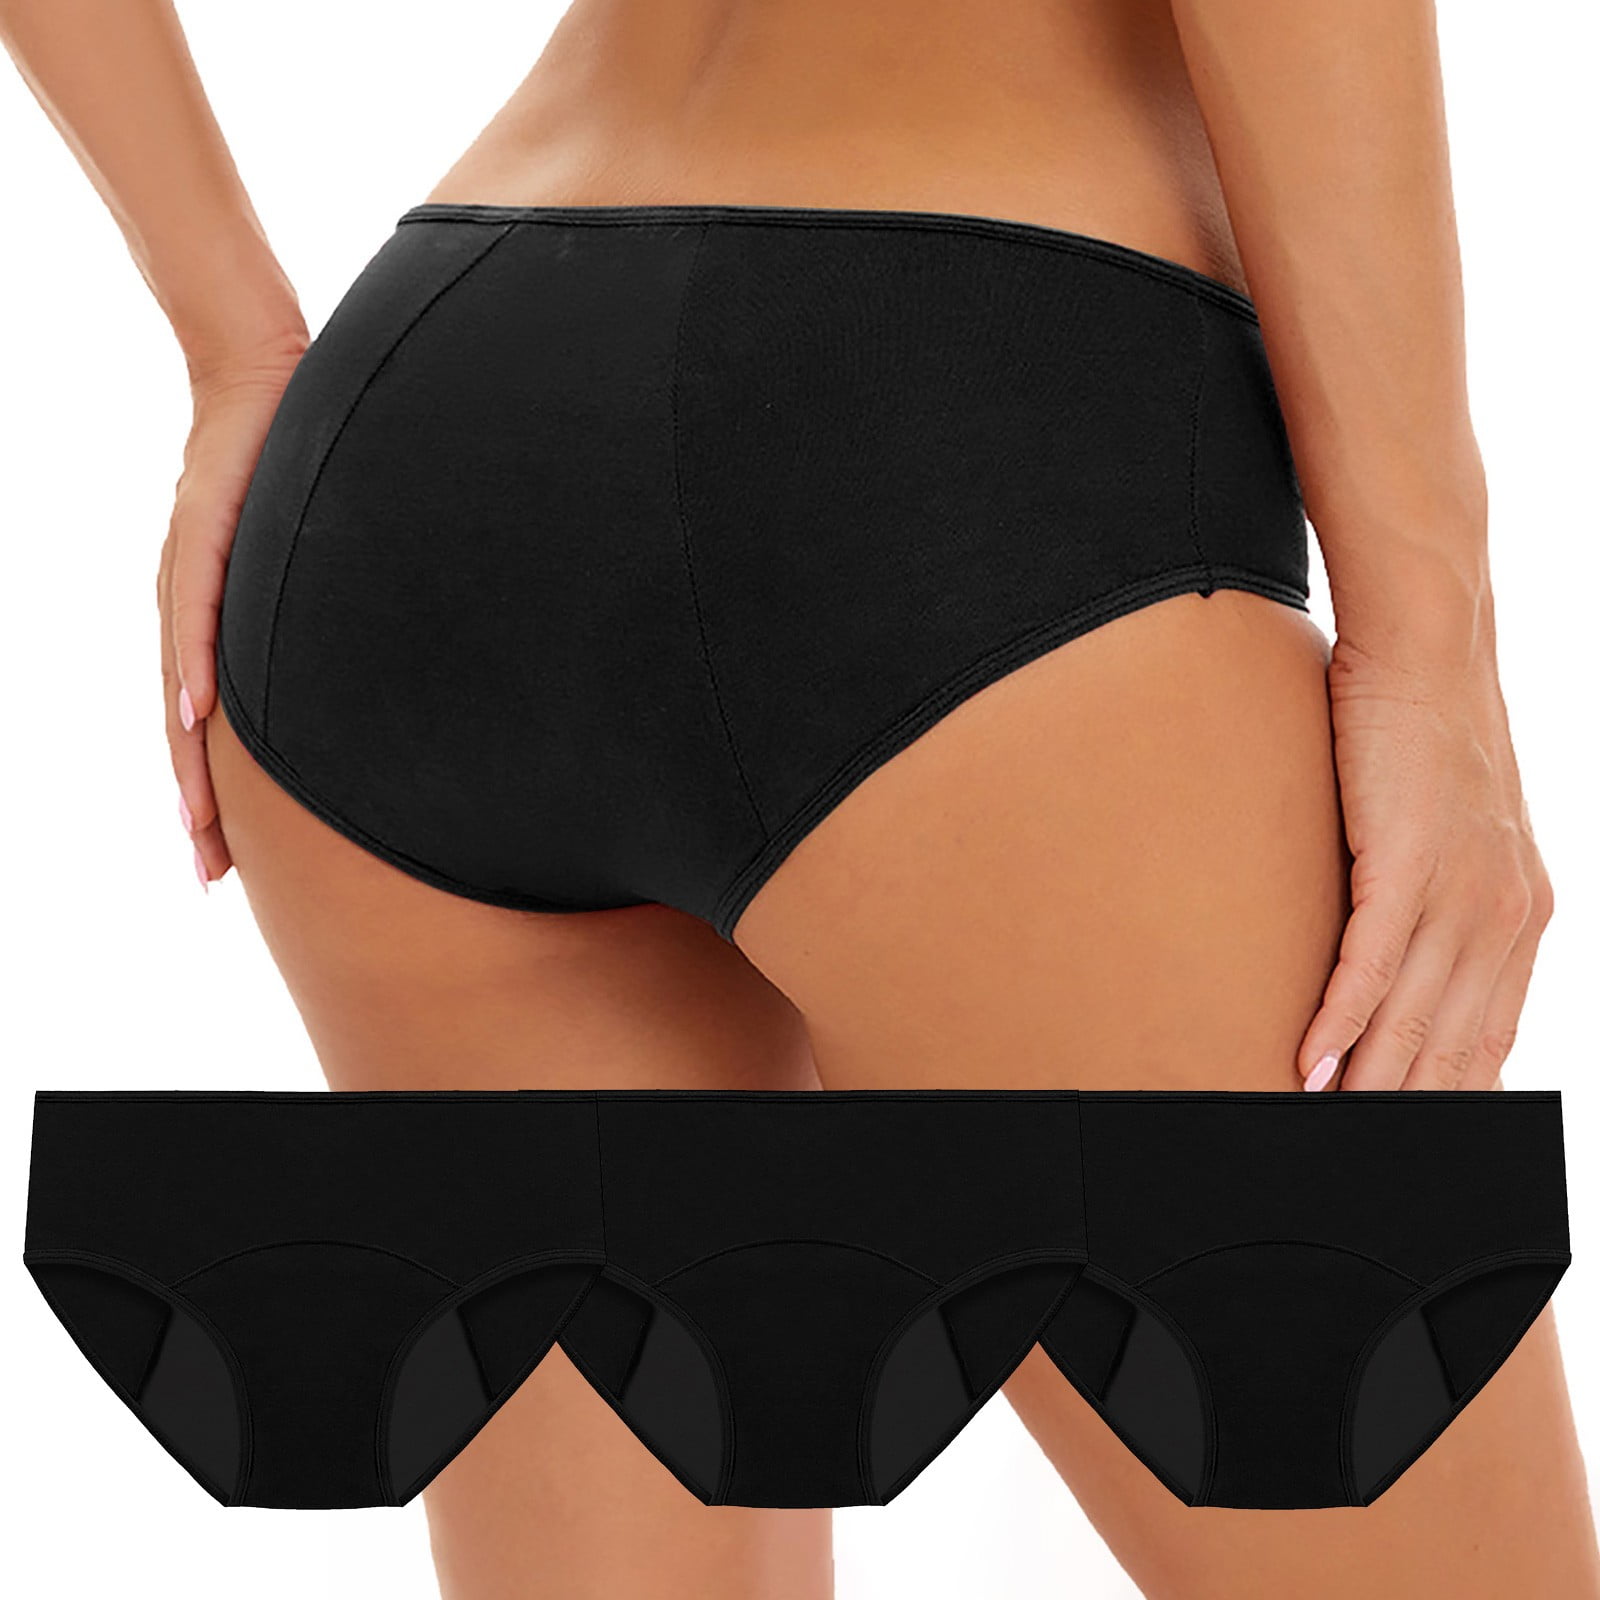 3 PCS/Set Women Cotton Panties Menstruation Period Underwear